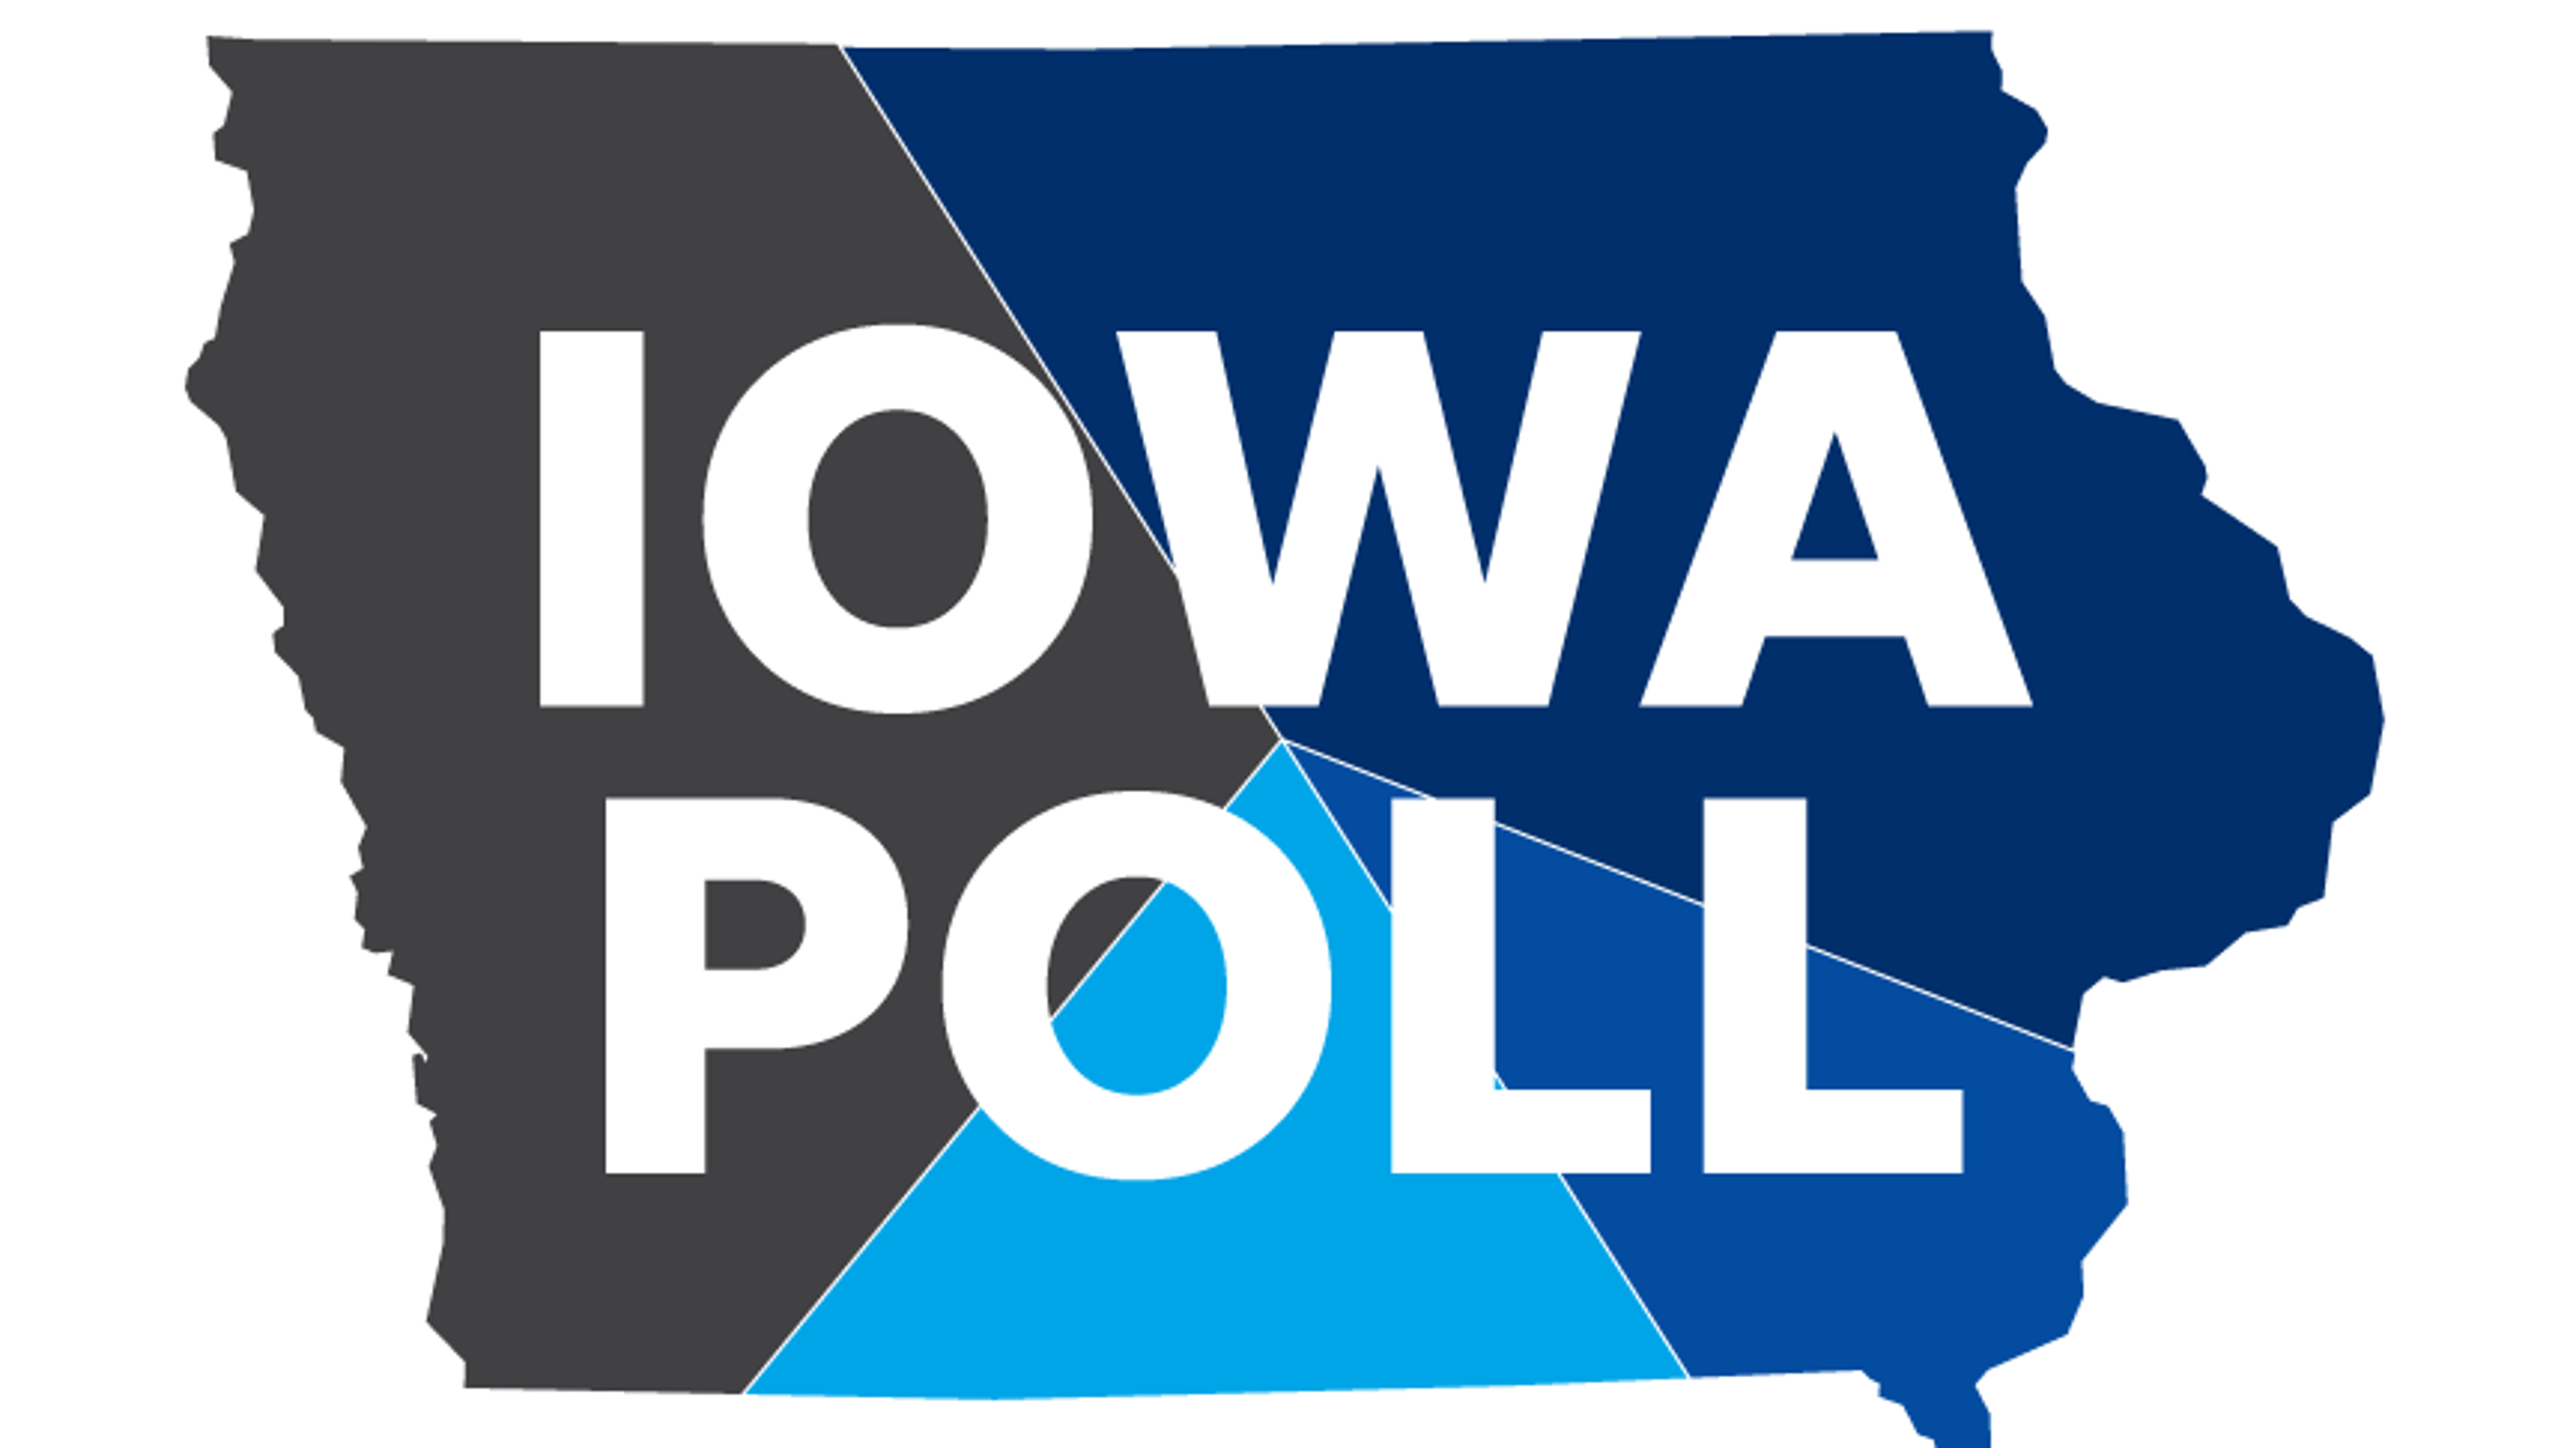 Iowa Poll: Biden leads, followed by Sanders, Warren and Buttigieg2989 x 1680